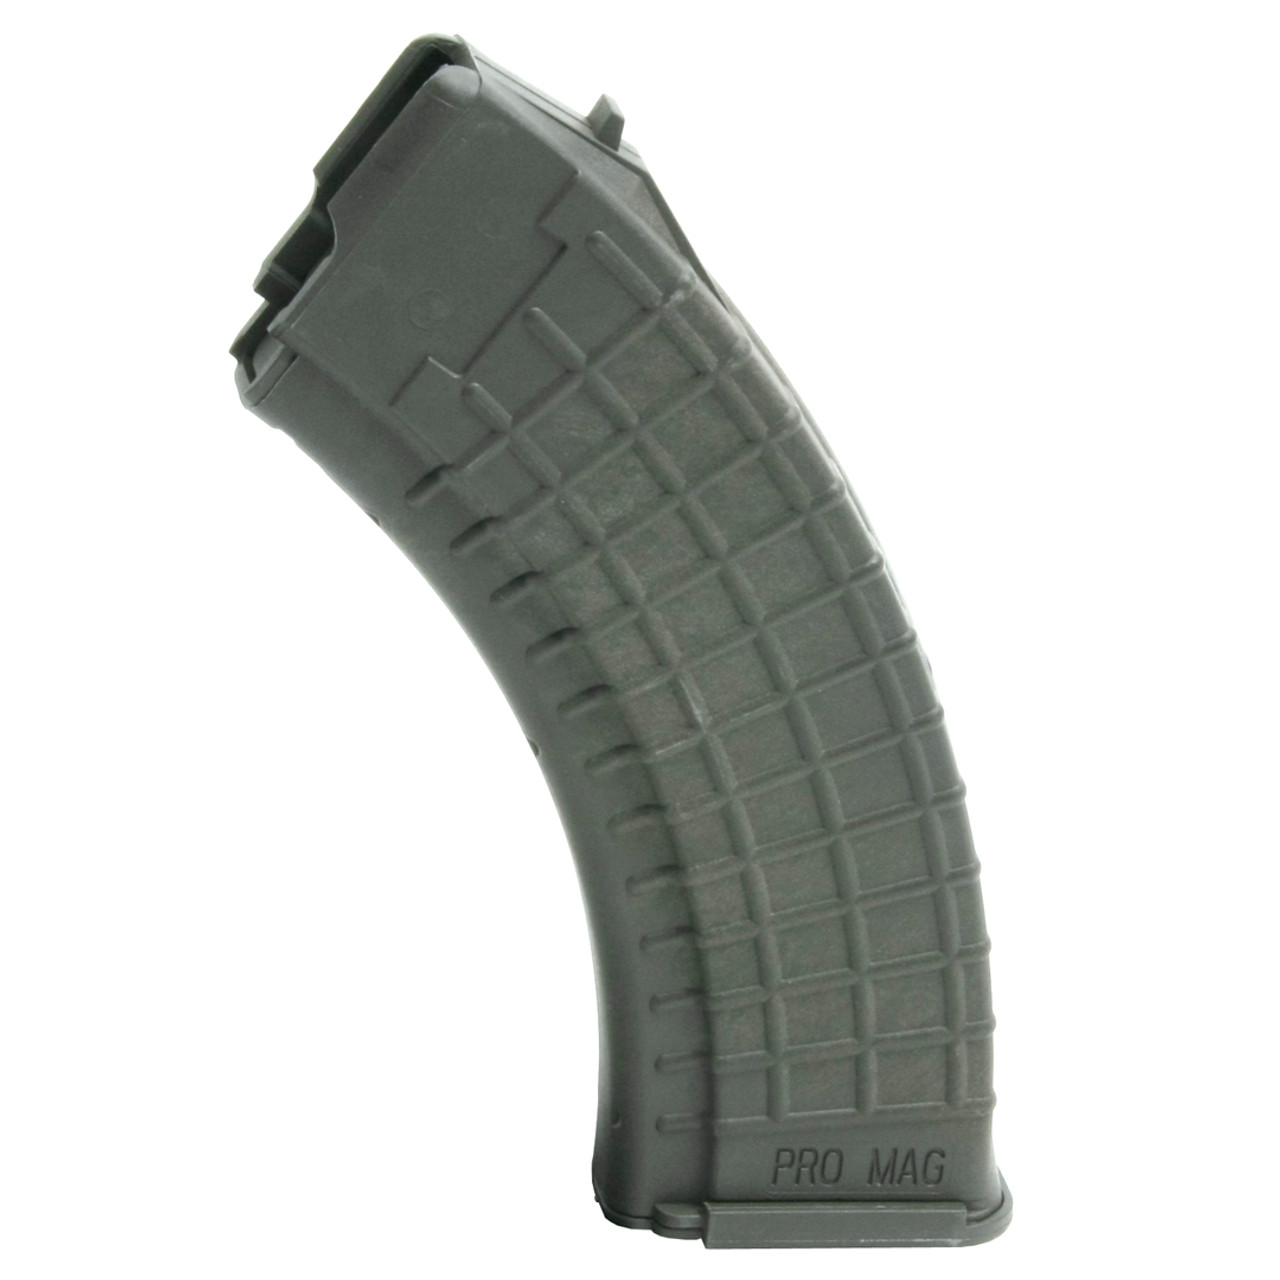 AK-47® 7.62x39mm (30) Rd - Olive Drab Polymer